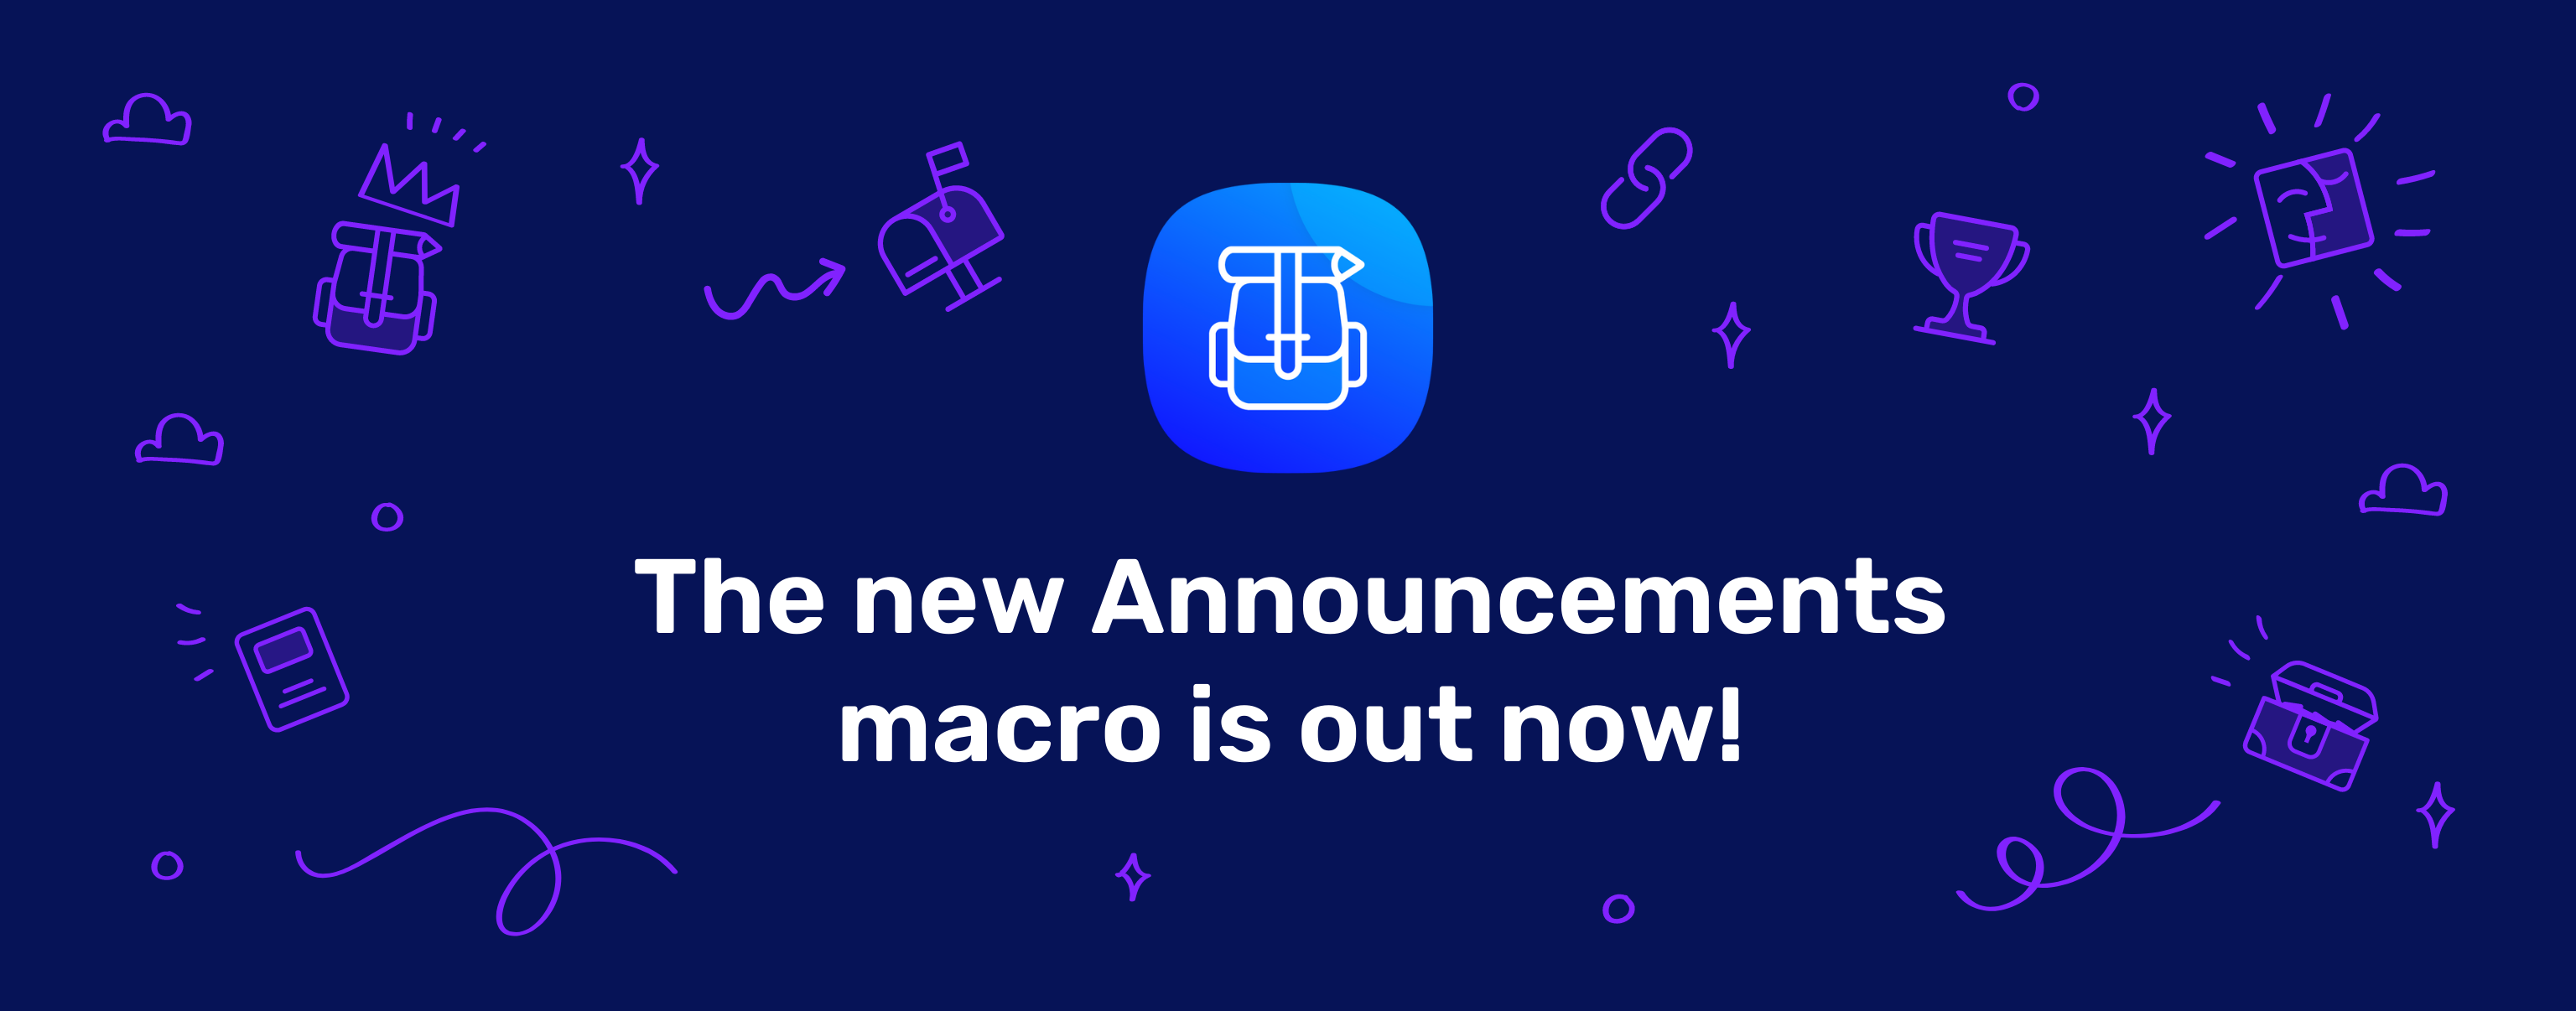 Introducing the new MacroSuite macro_Announcements